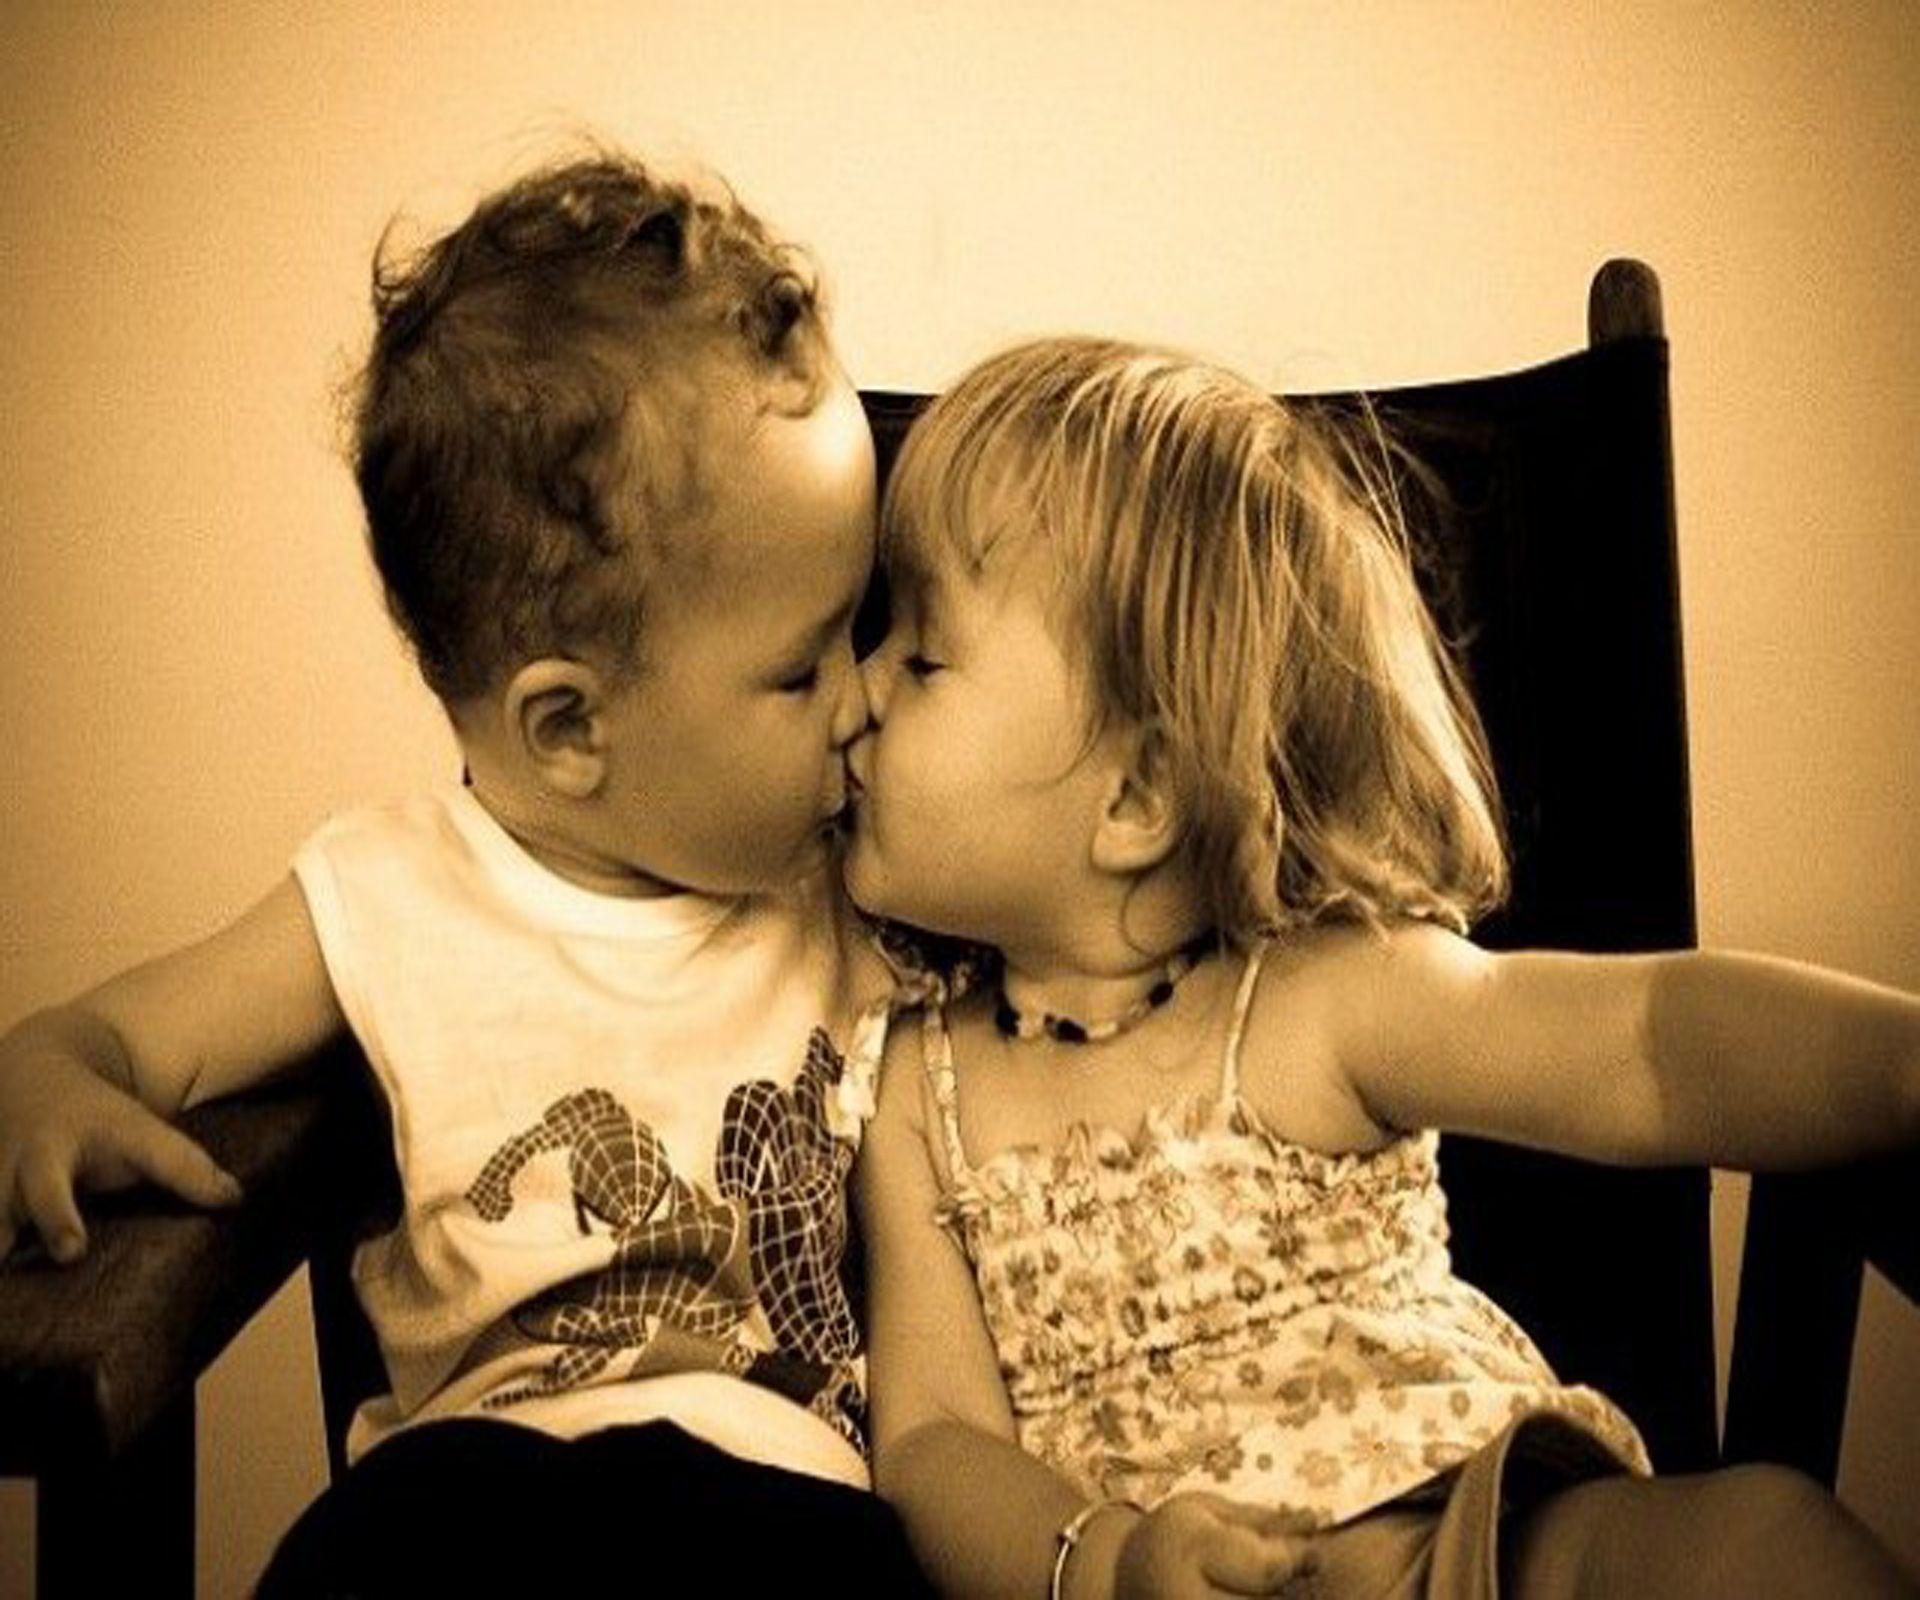 New Romantic Kissing Couple Image HD Wallpaper. Kids kiss, Baby kiss, Keeping kids safe online